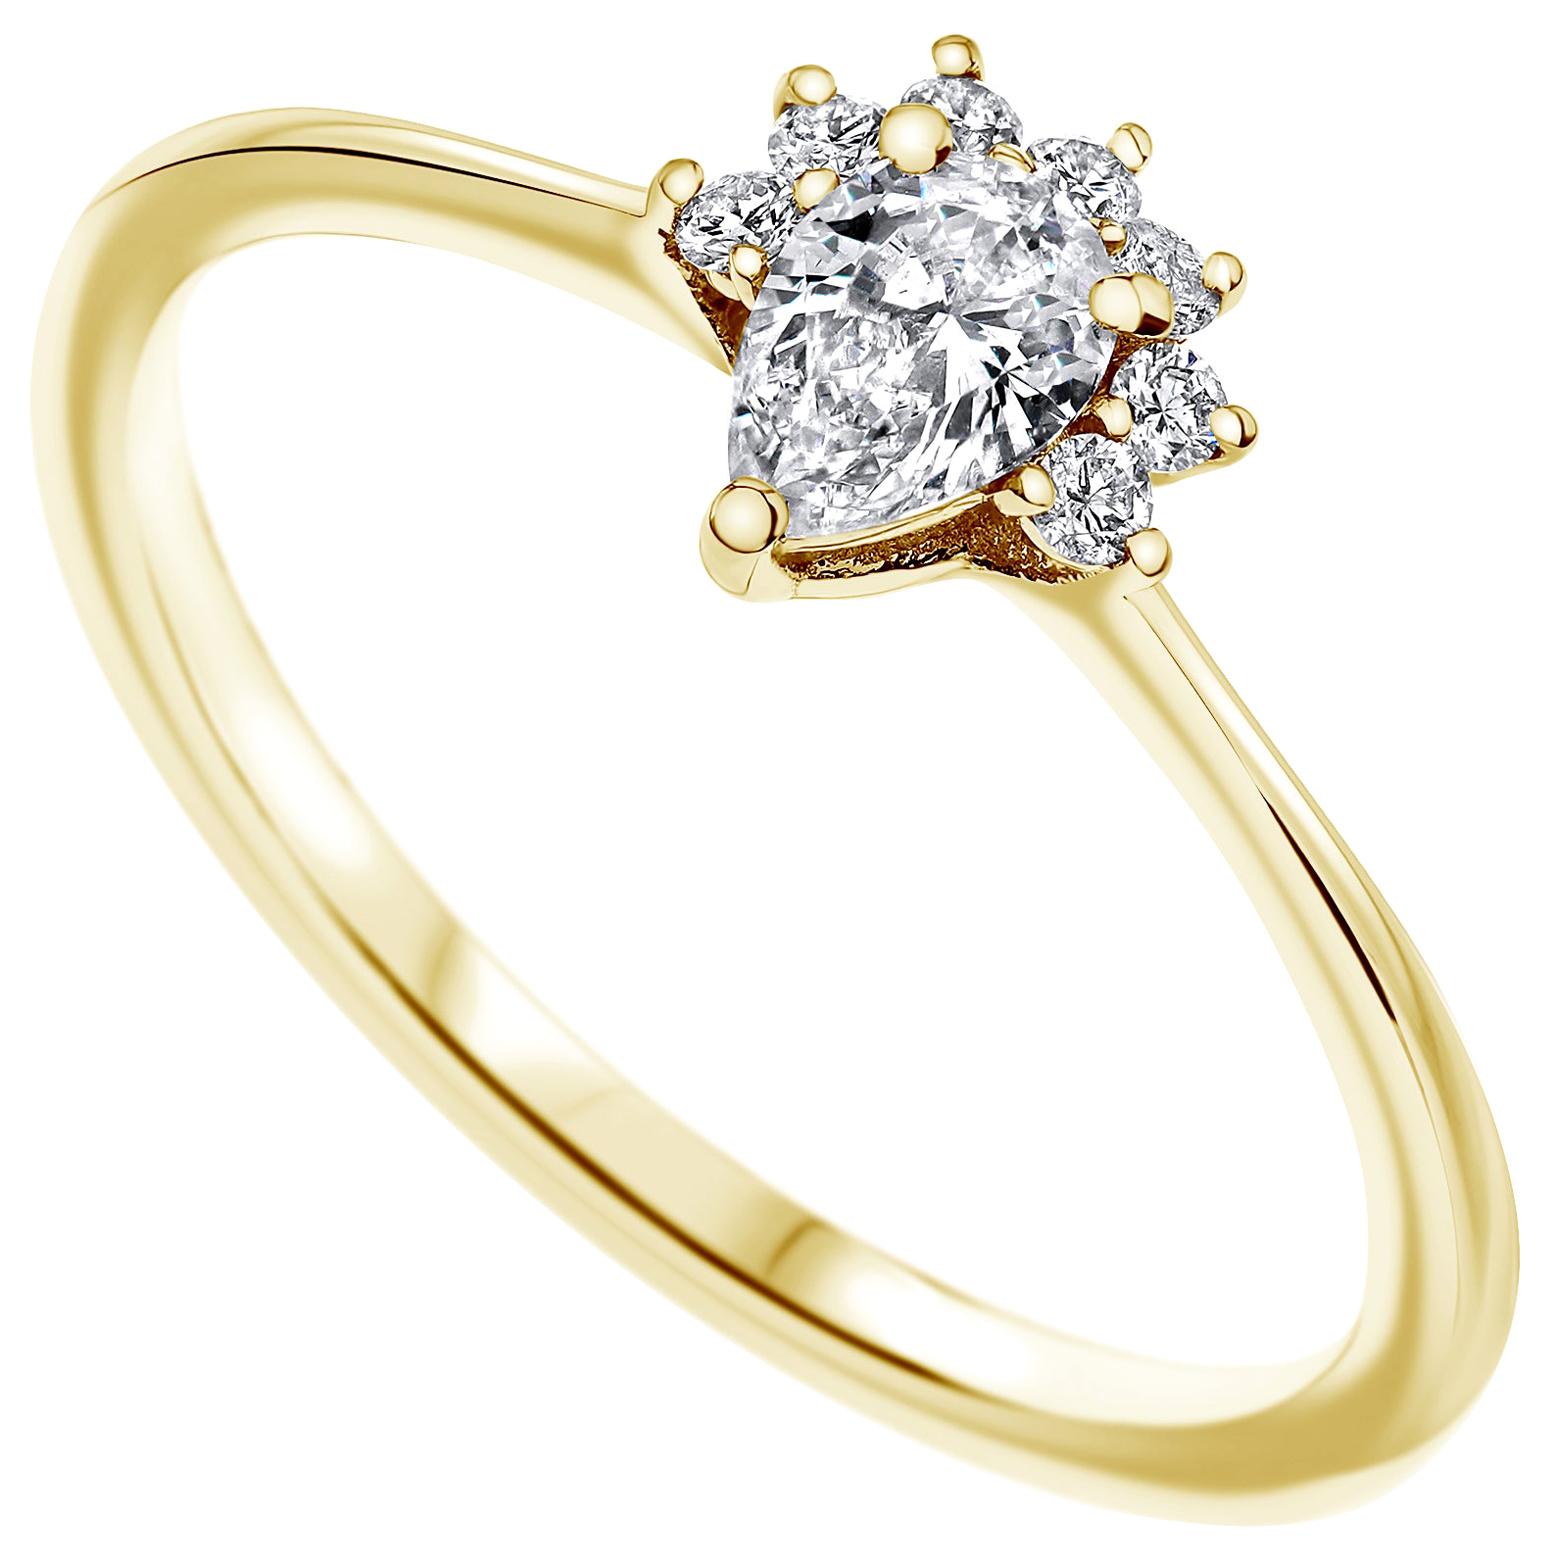 0.23 Carat Pear & Round Cut Diamonds Crown Ring 14k Yellow Gold - Shlomit Rogel For Sale